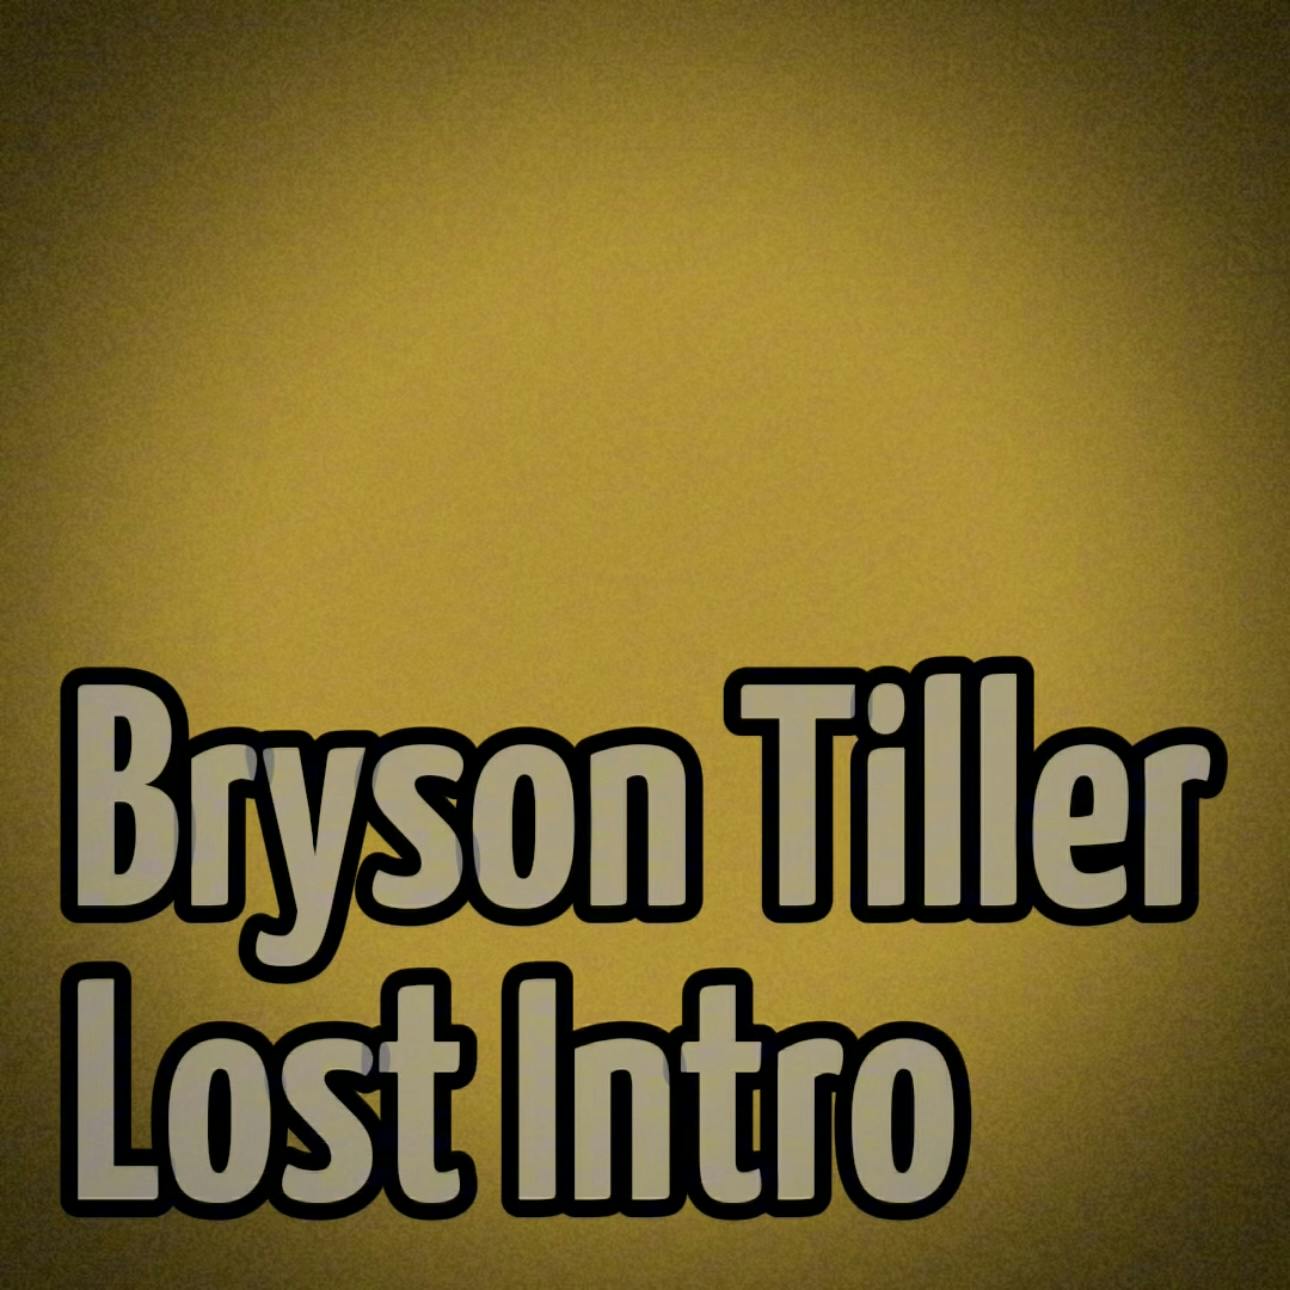 Bryson Tiller - Lost Intro